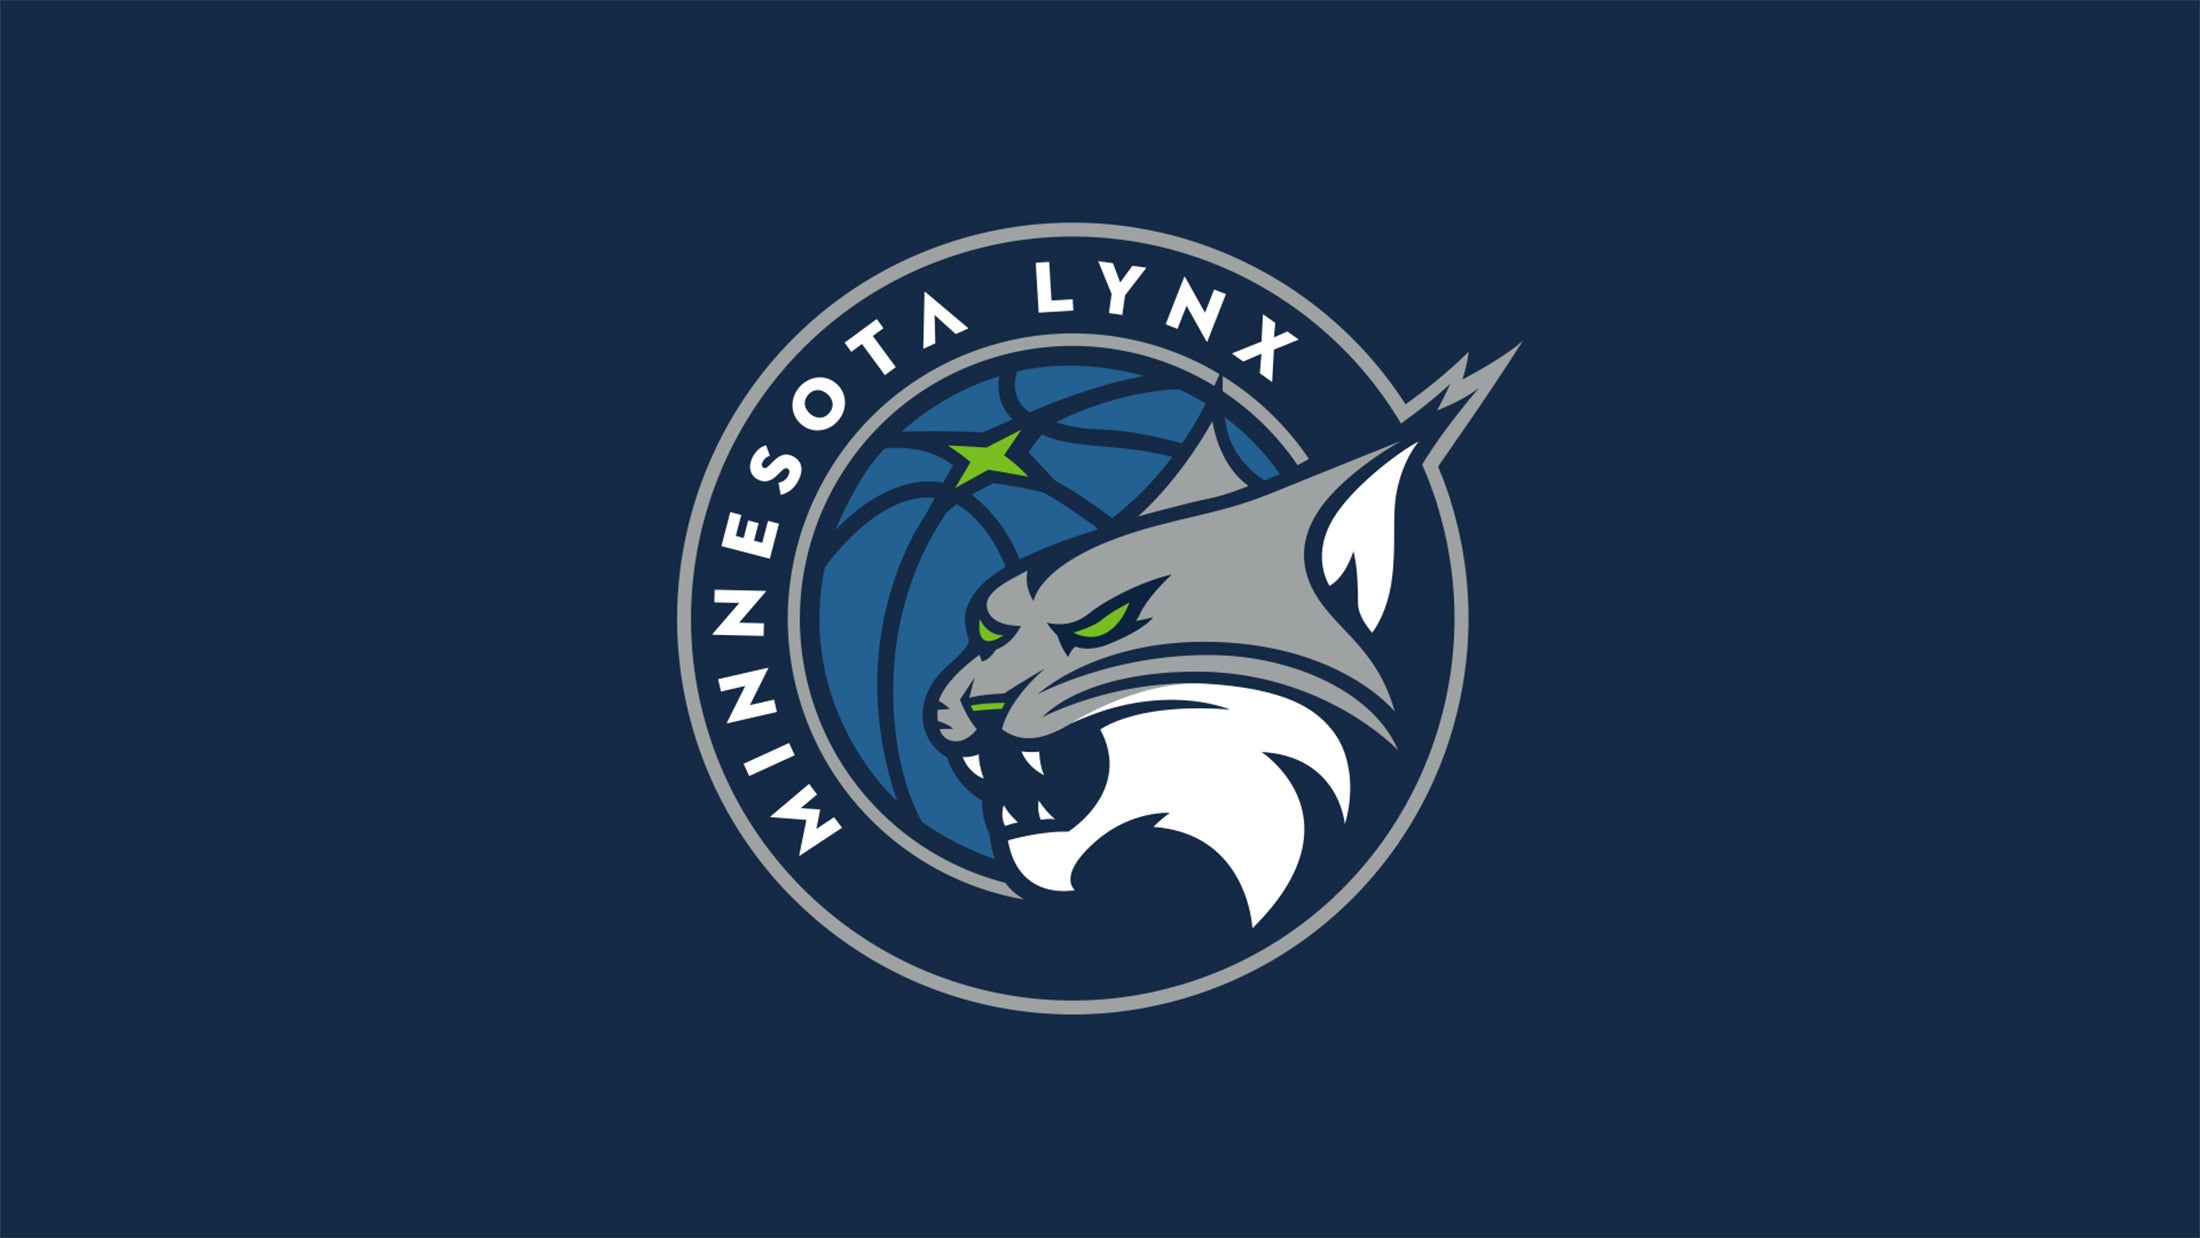 Minnesota Lynx vs. Phoenix Mercury at Target Center